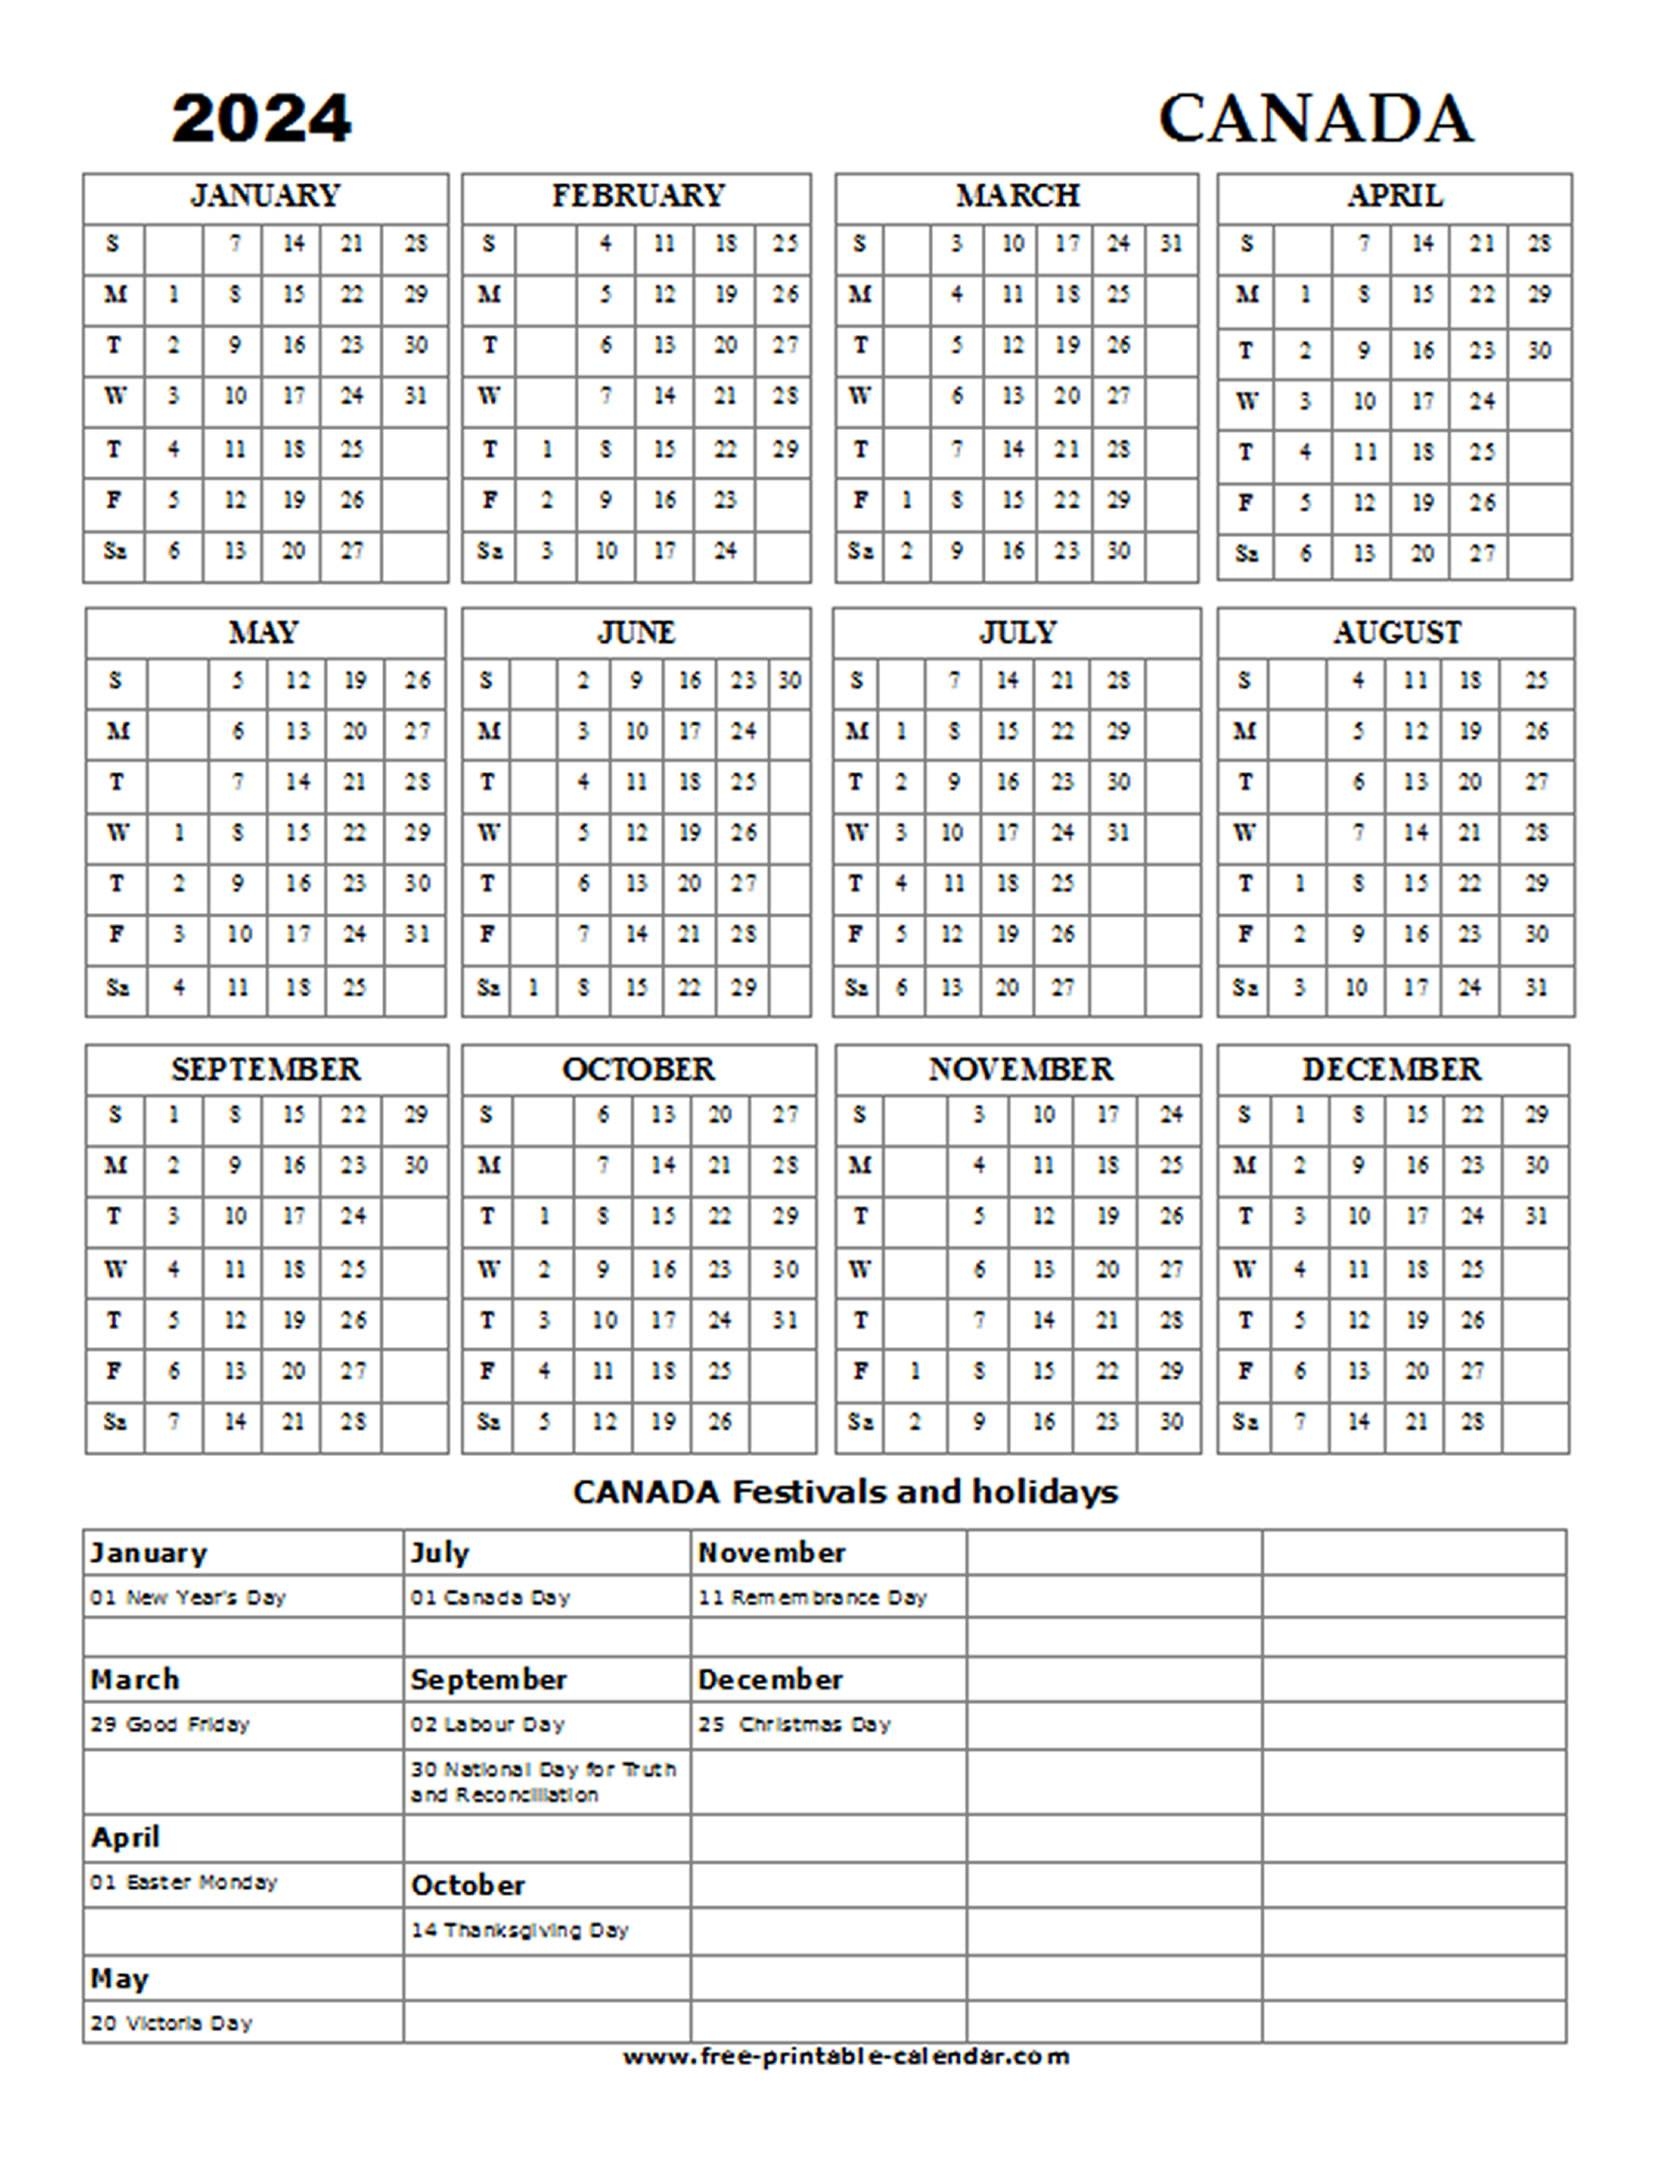 2024 Canada Holiday Calendar - Free-Printable-Calendar in Free Printable Calendar 2024 With Holidays Canada